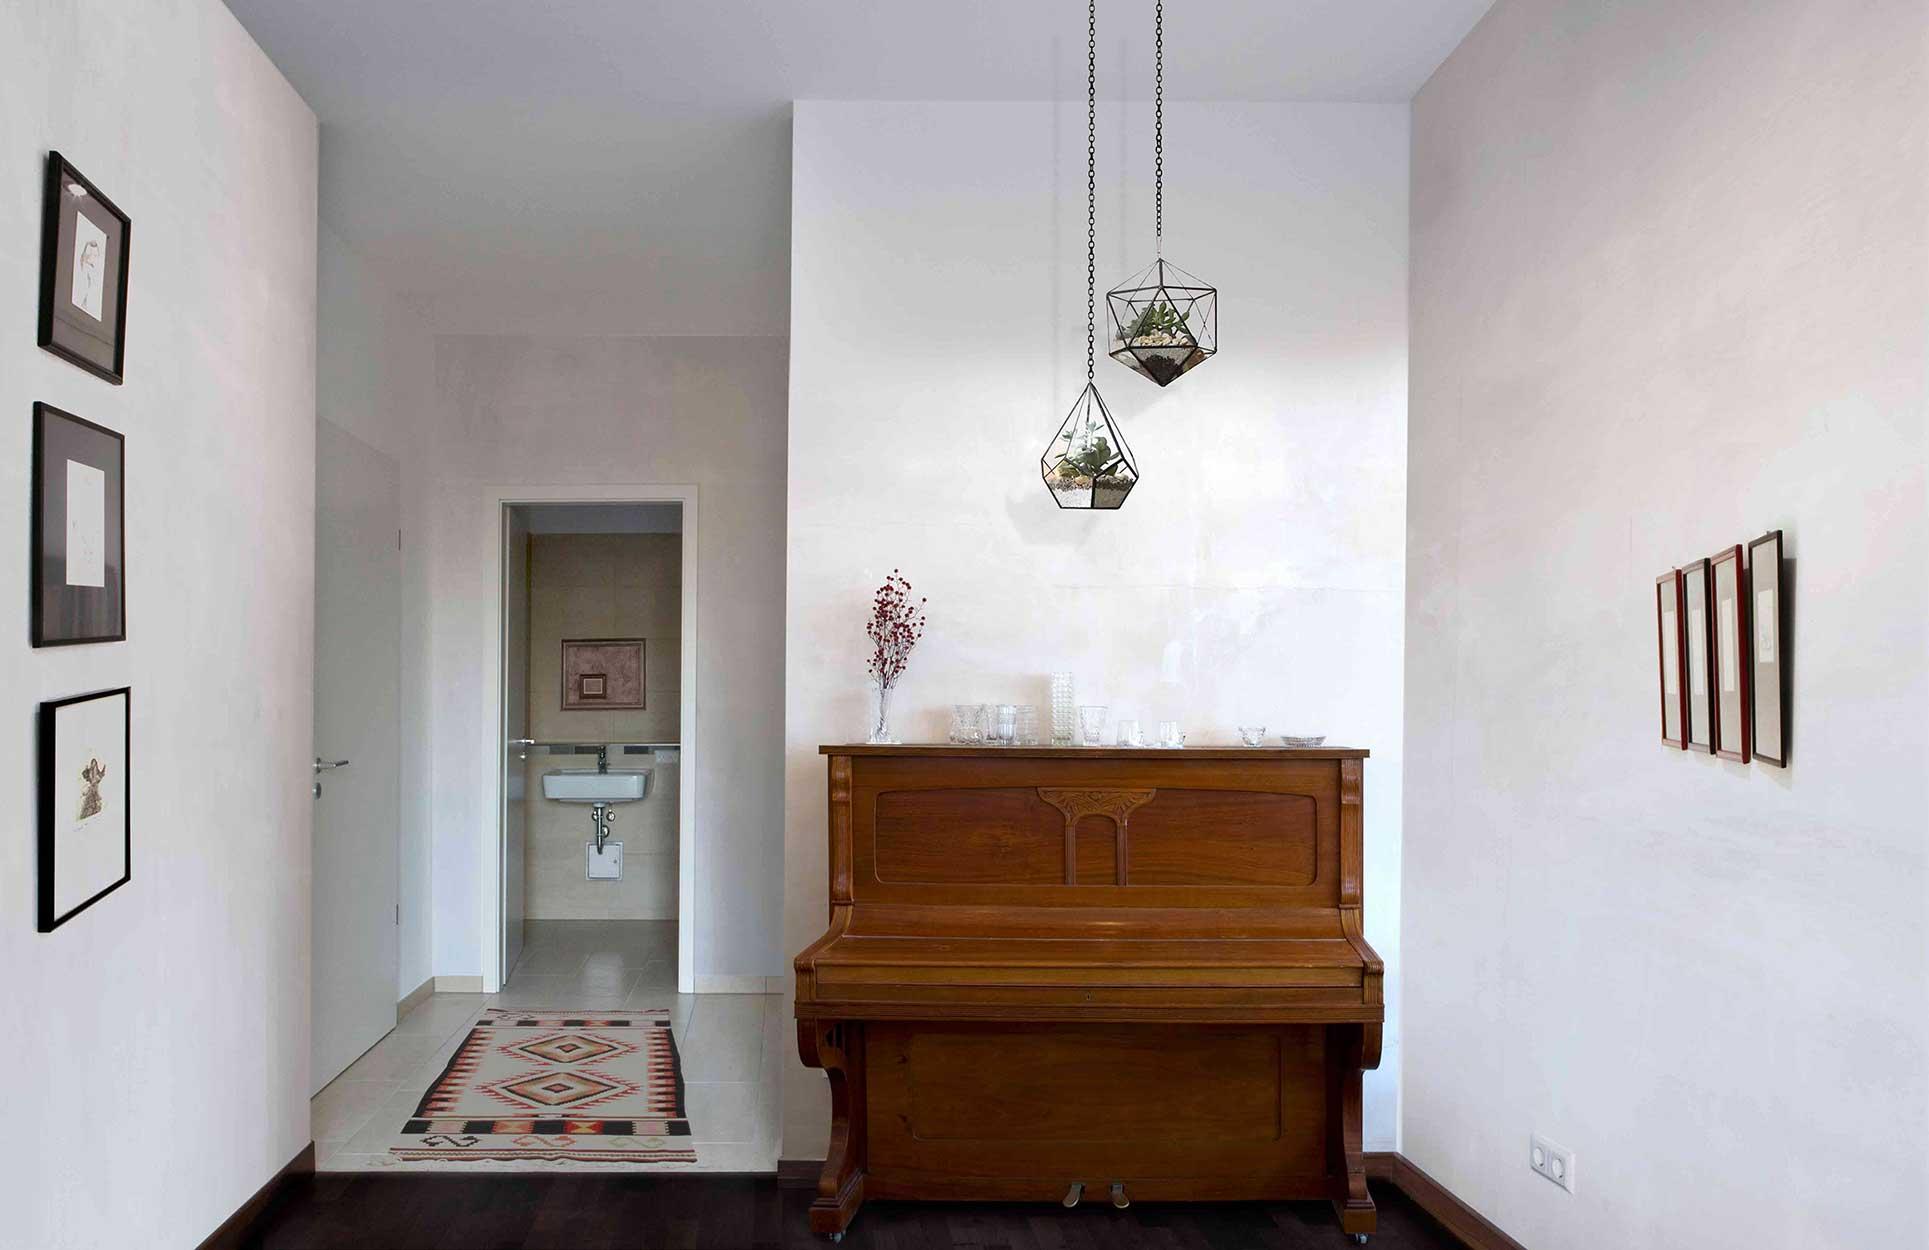 Musterwohnung Wohnzimmer #minimalismus ©Caterina Rancho